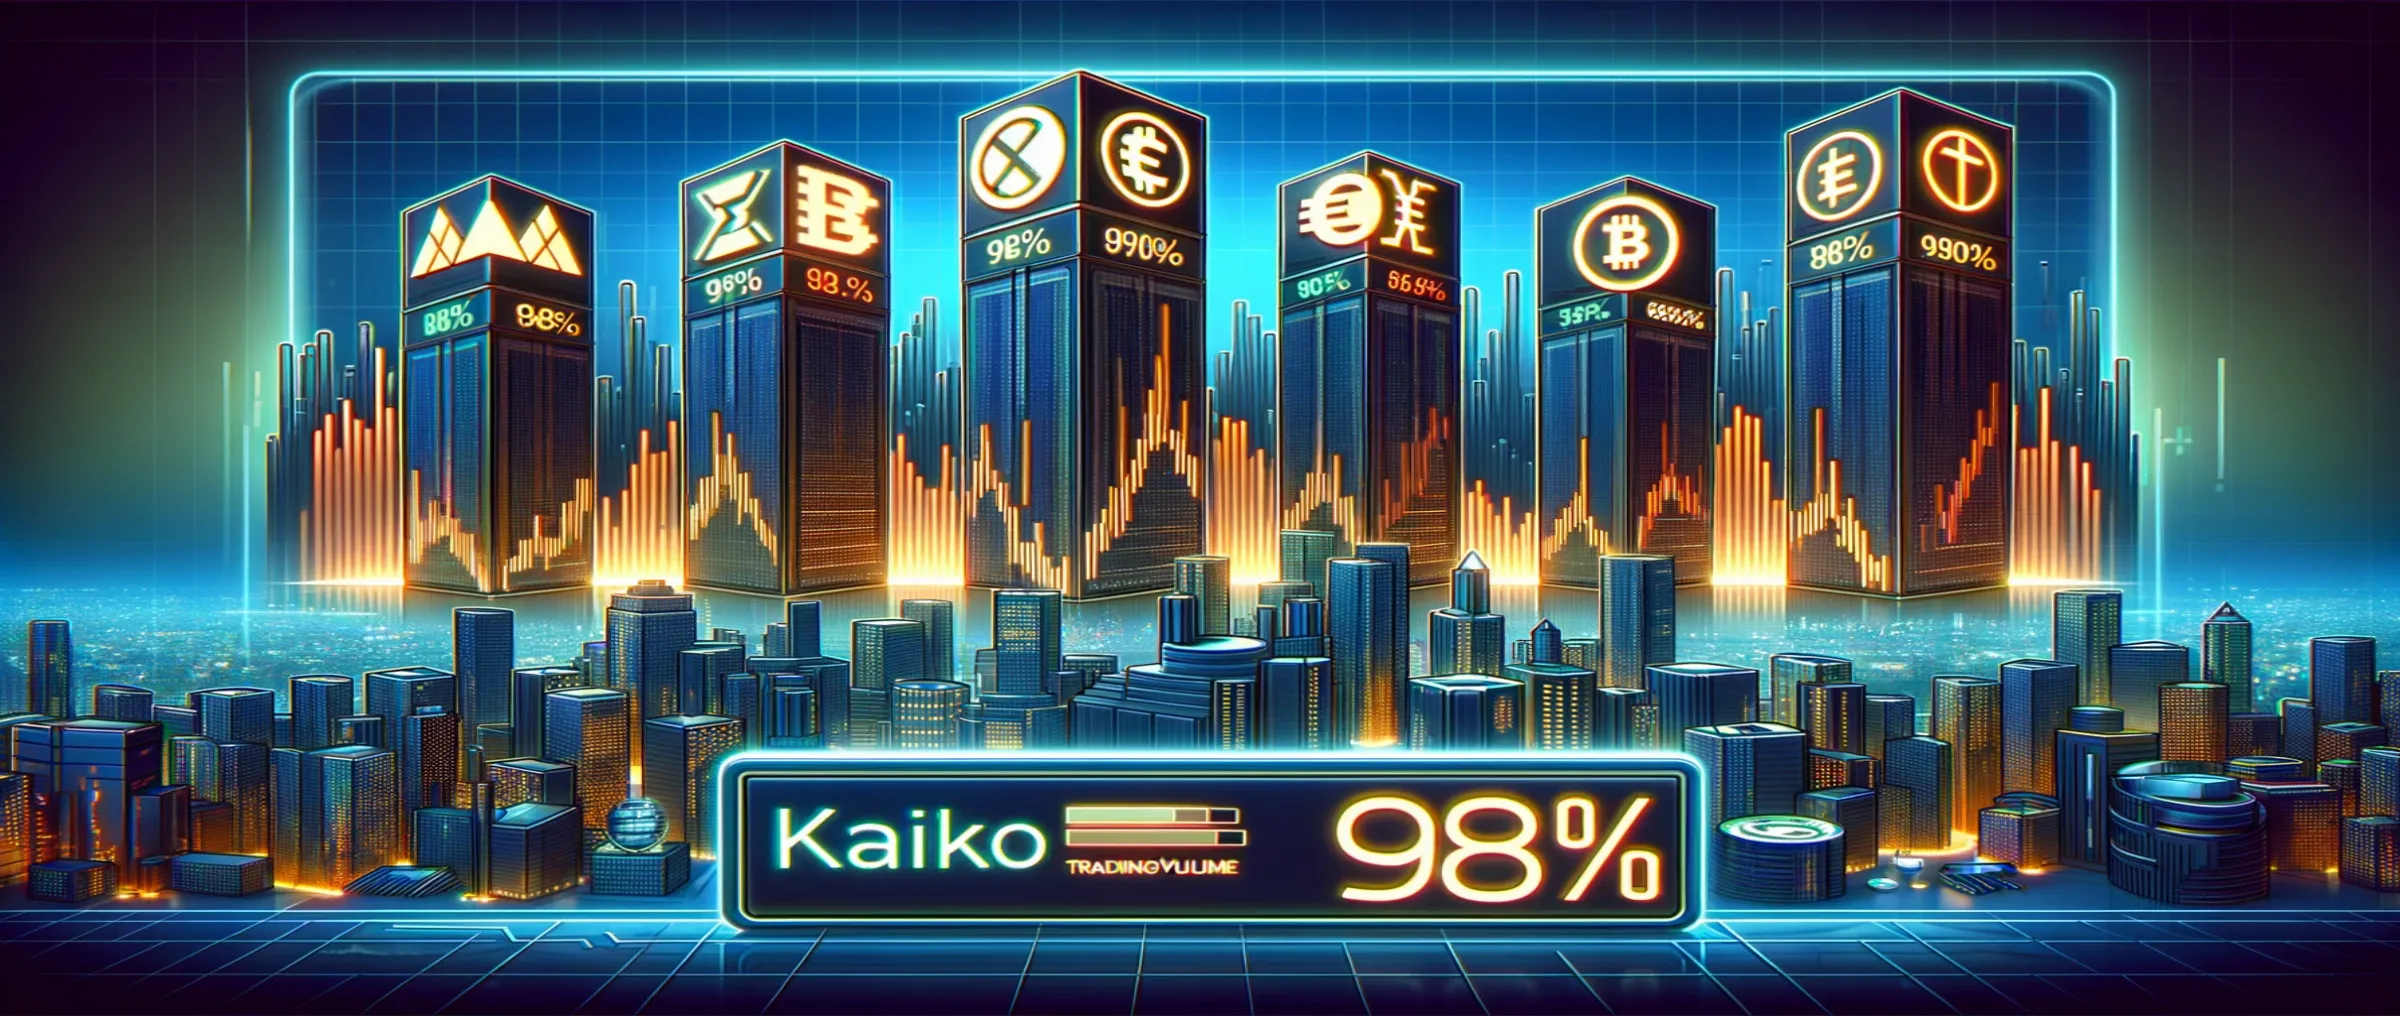 Kaiko: Пять криптобирж контролируют 98% торгового объема в евро